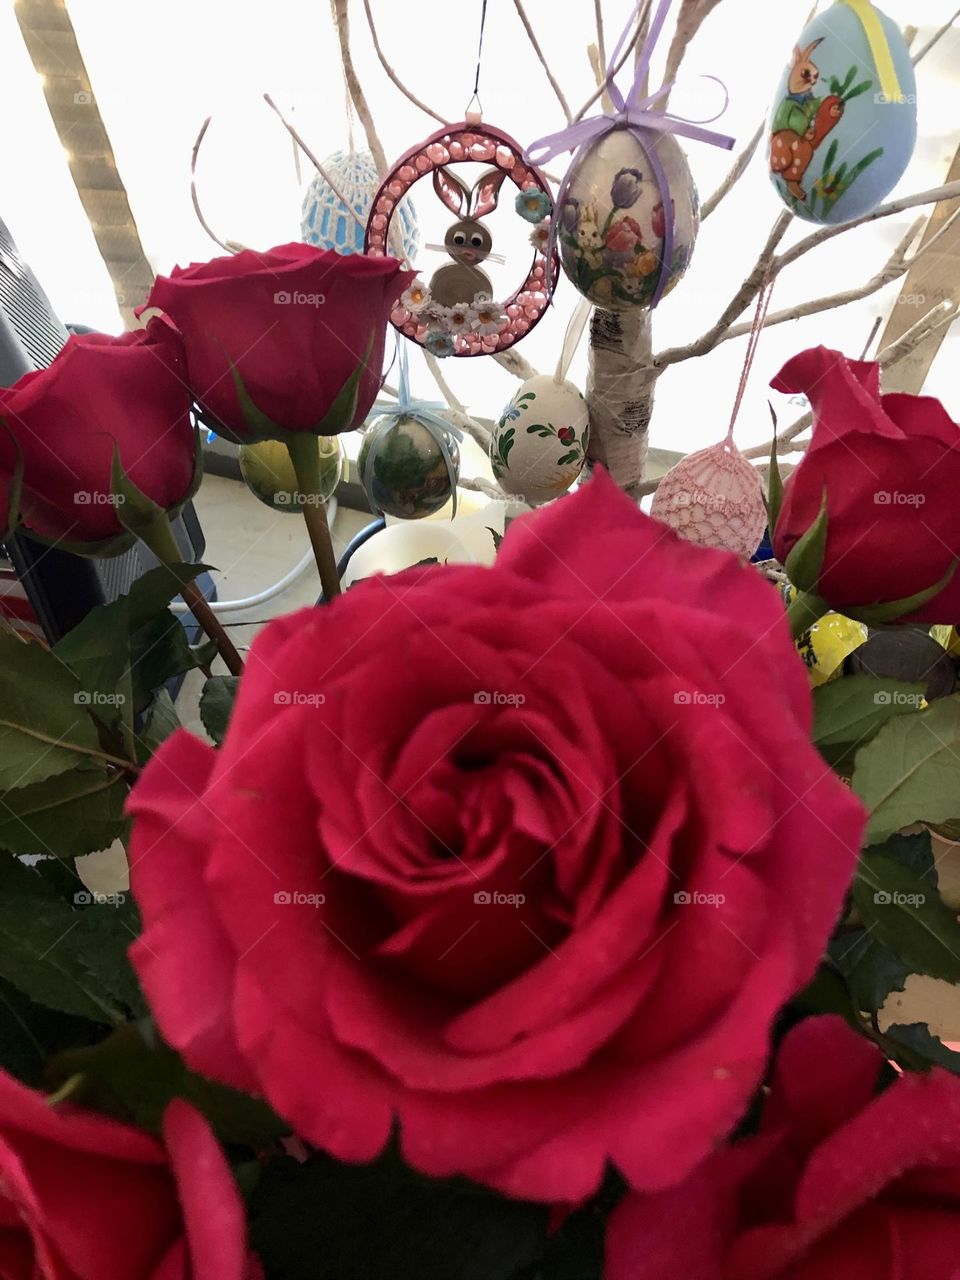 My beautiful  Roses & eater egg decoration 